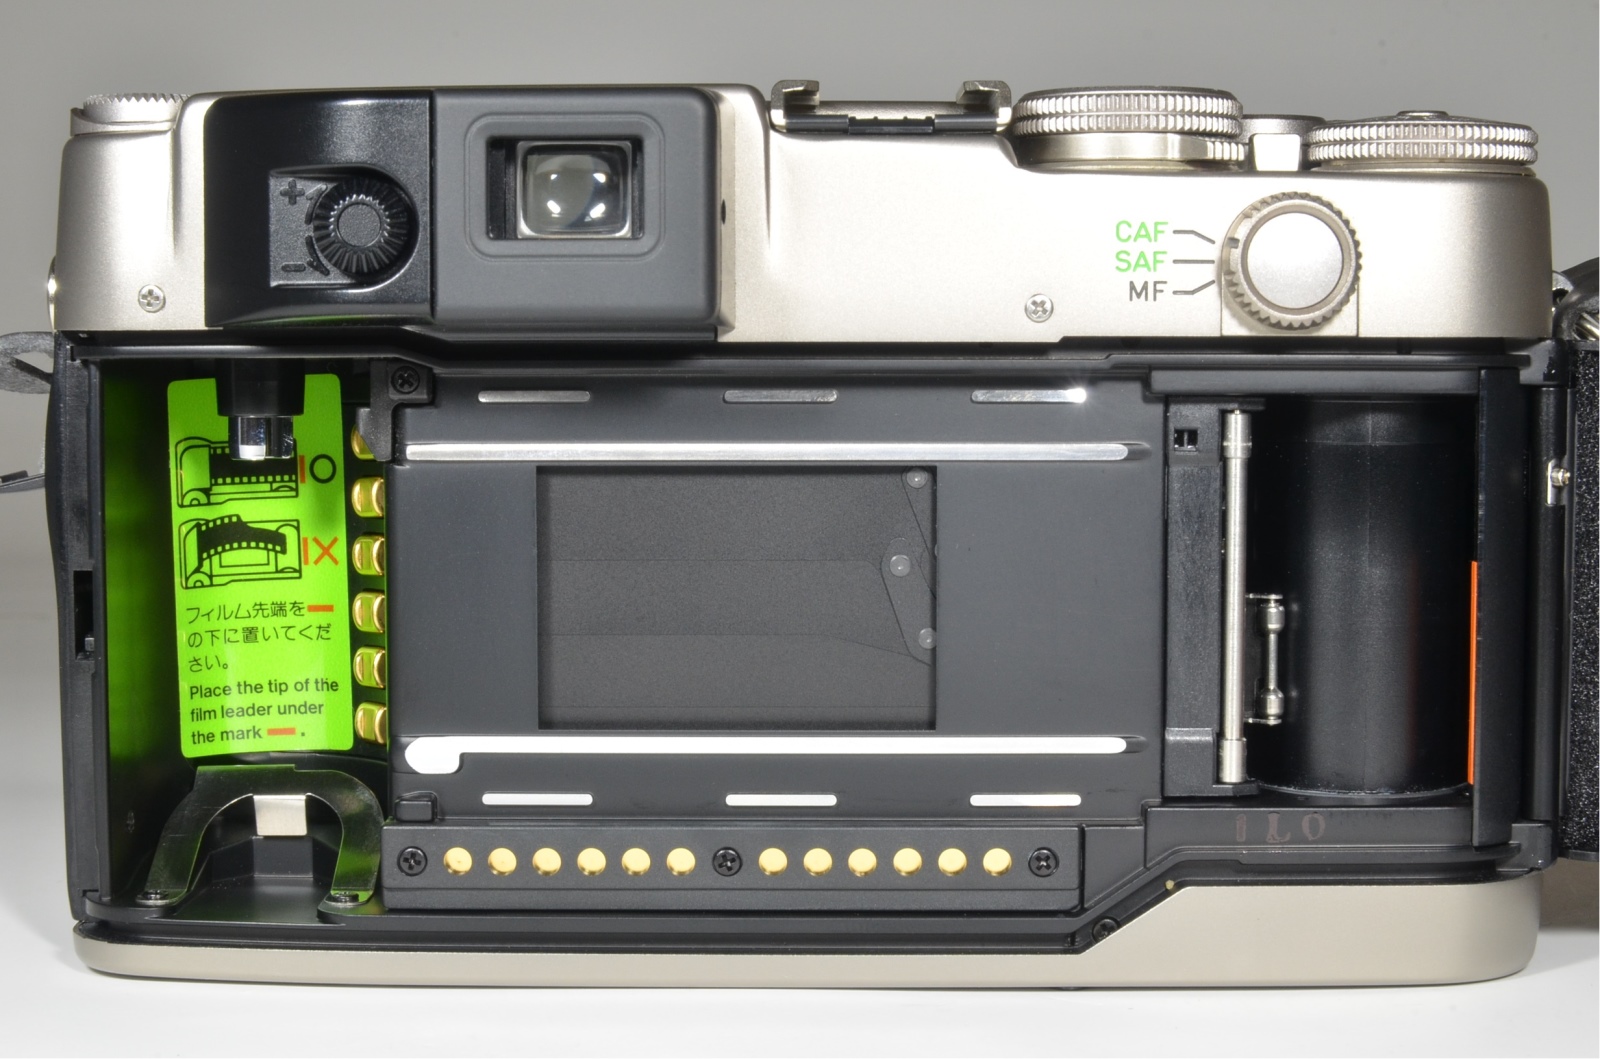 CONTAX G2 Data Back 35mm Rangefinder Film Camera with Planar 45mm 